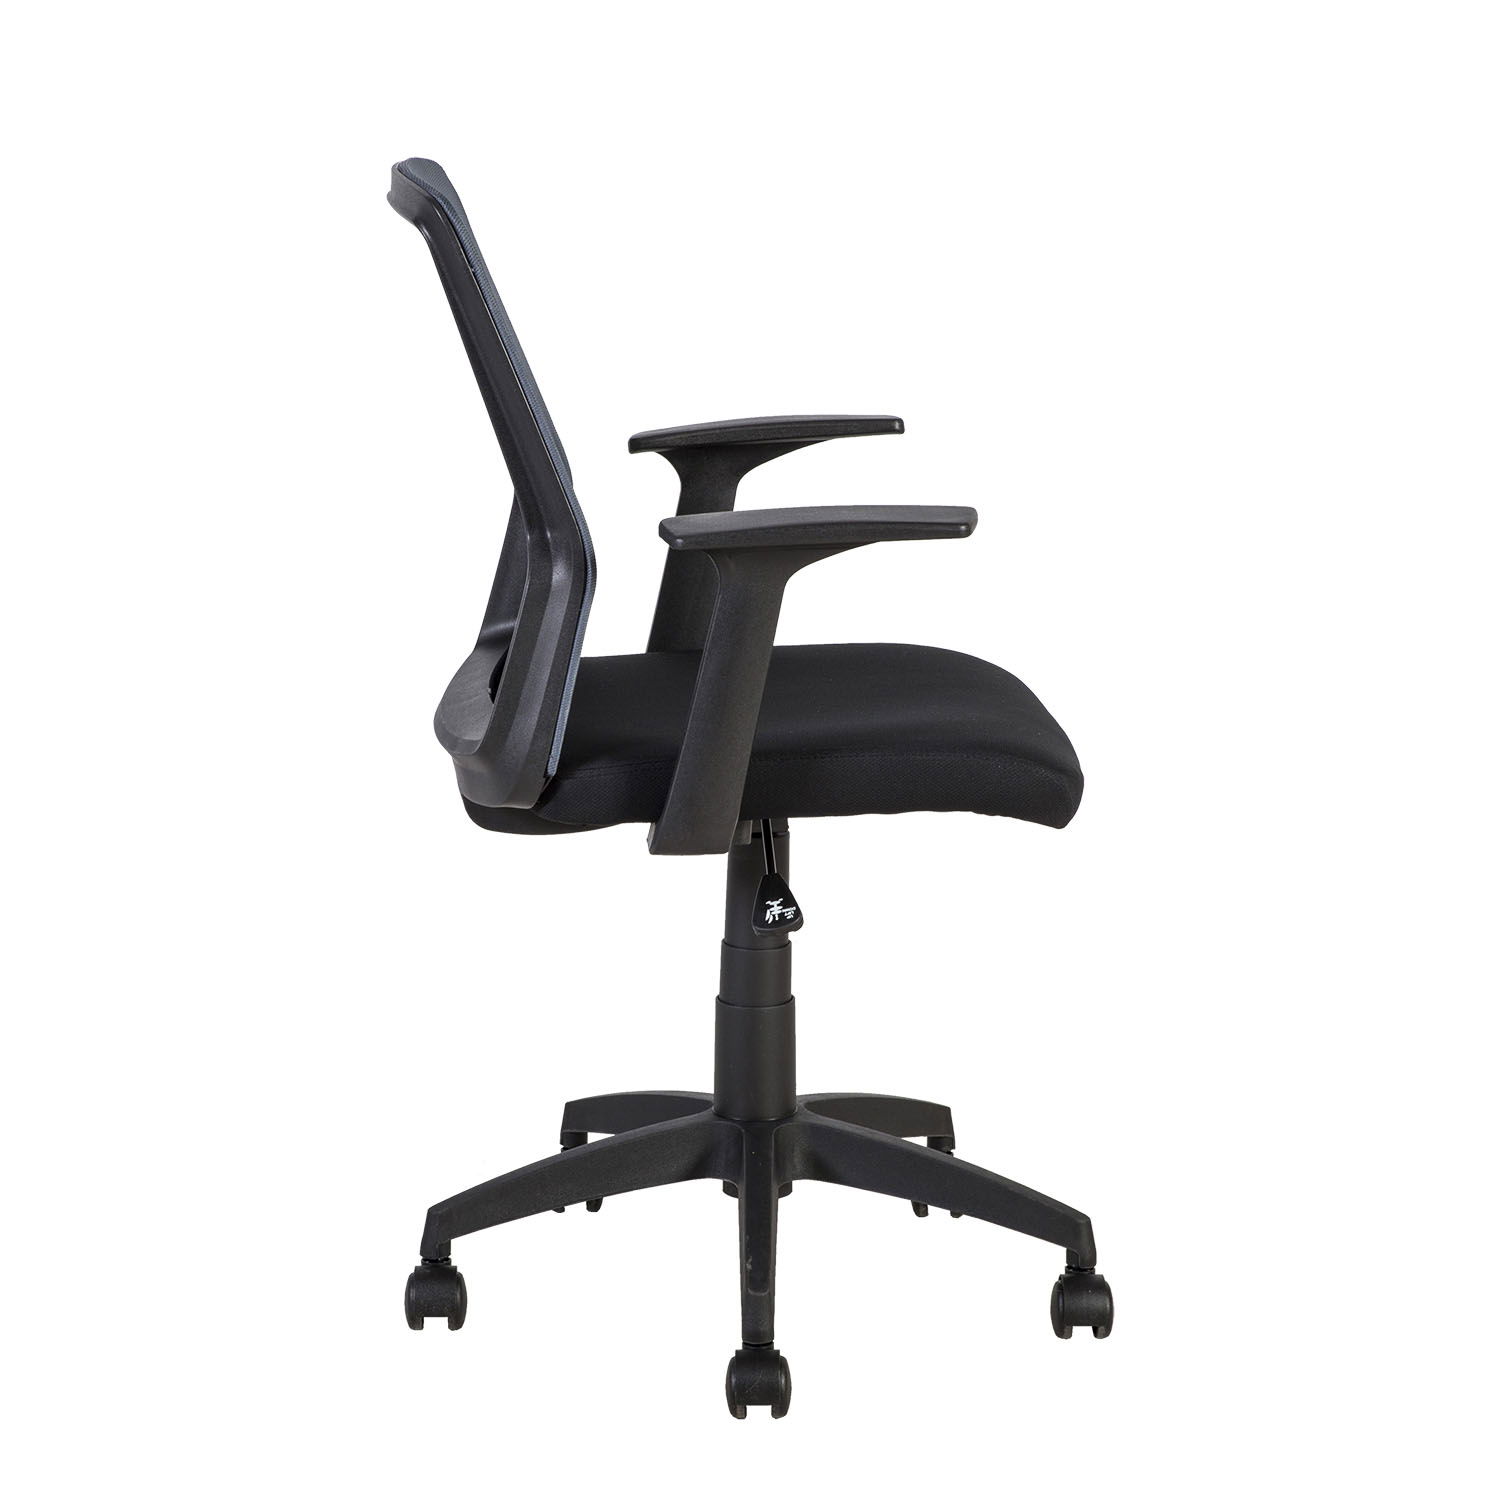 Biuro kėdė ALPHA, 60x55x87,5-95 cm, juoda/pilka-1